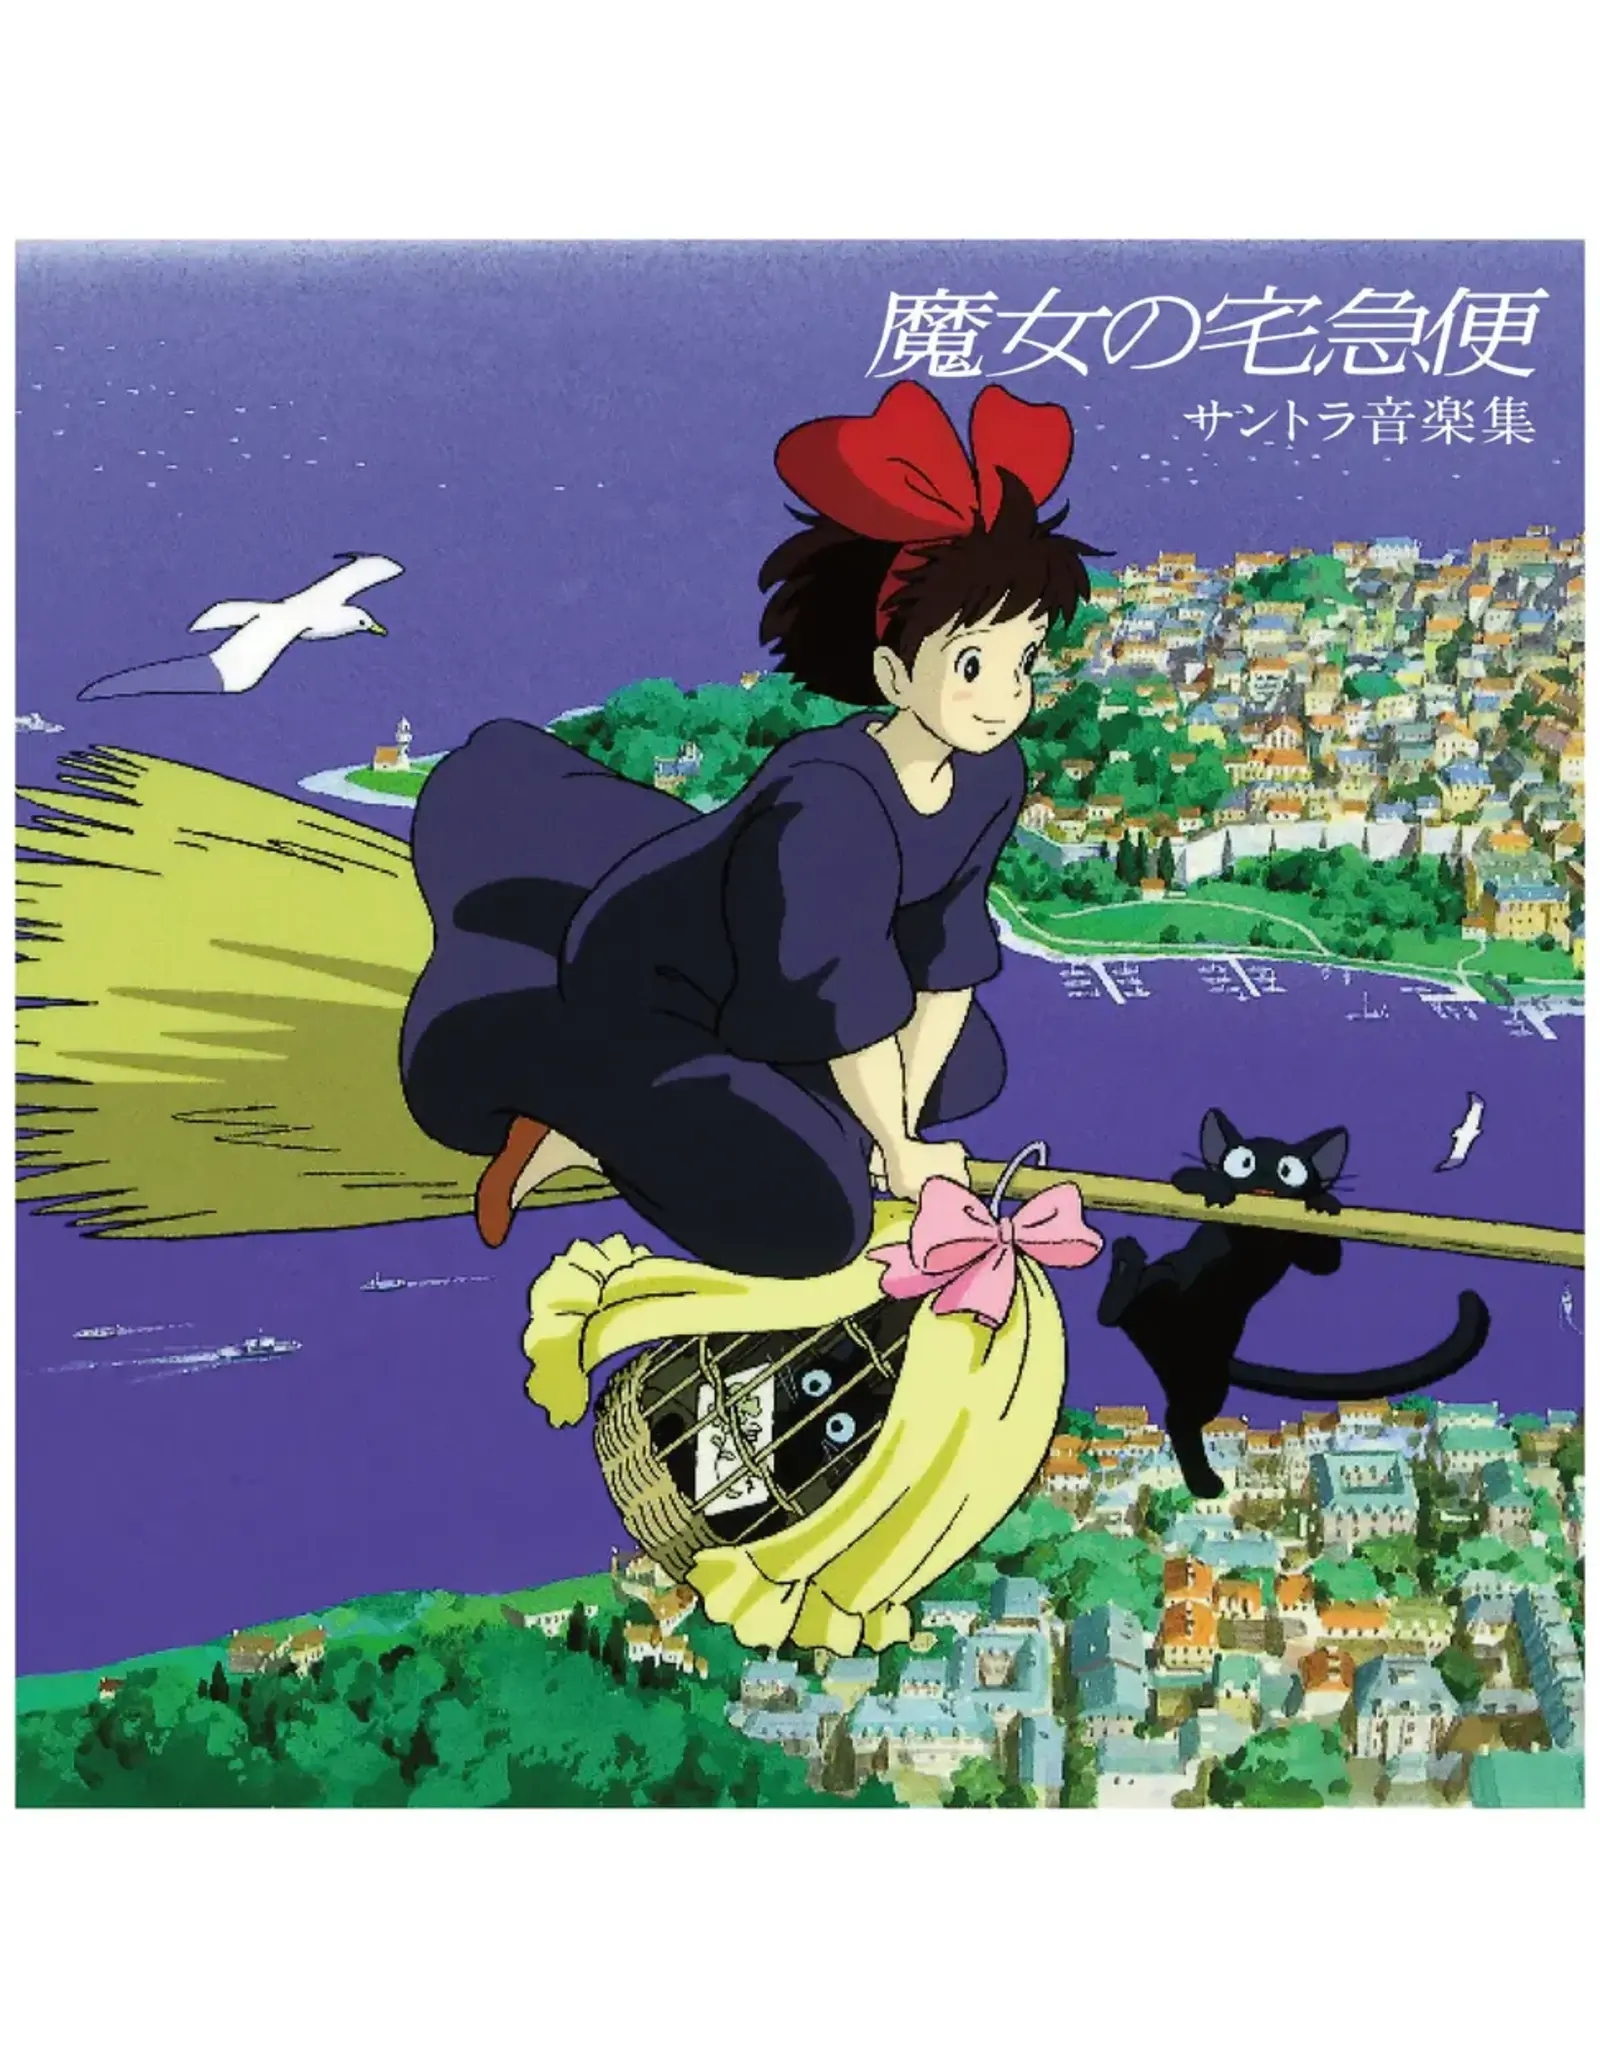 Studio Ghibli Hisaishi, Joe: Kiki's Delivery Service: Soundtrack Music Collection LP